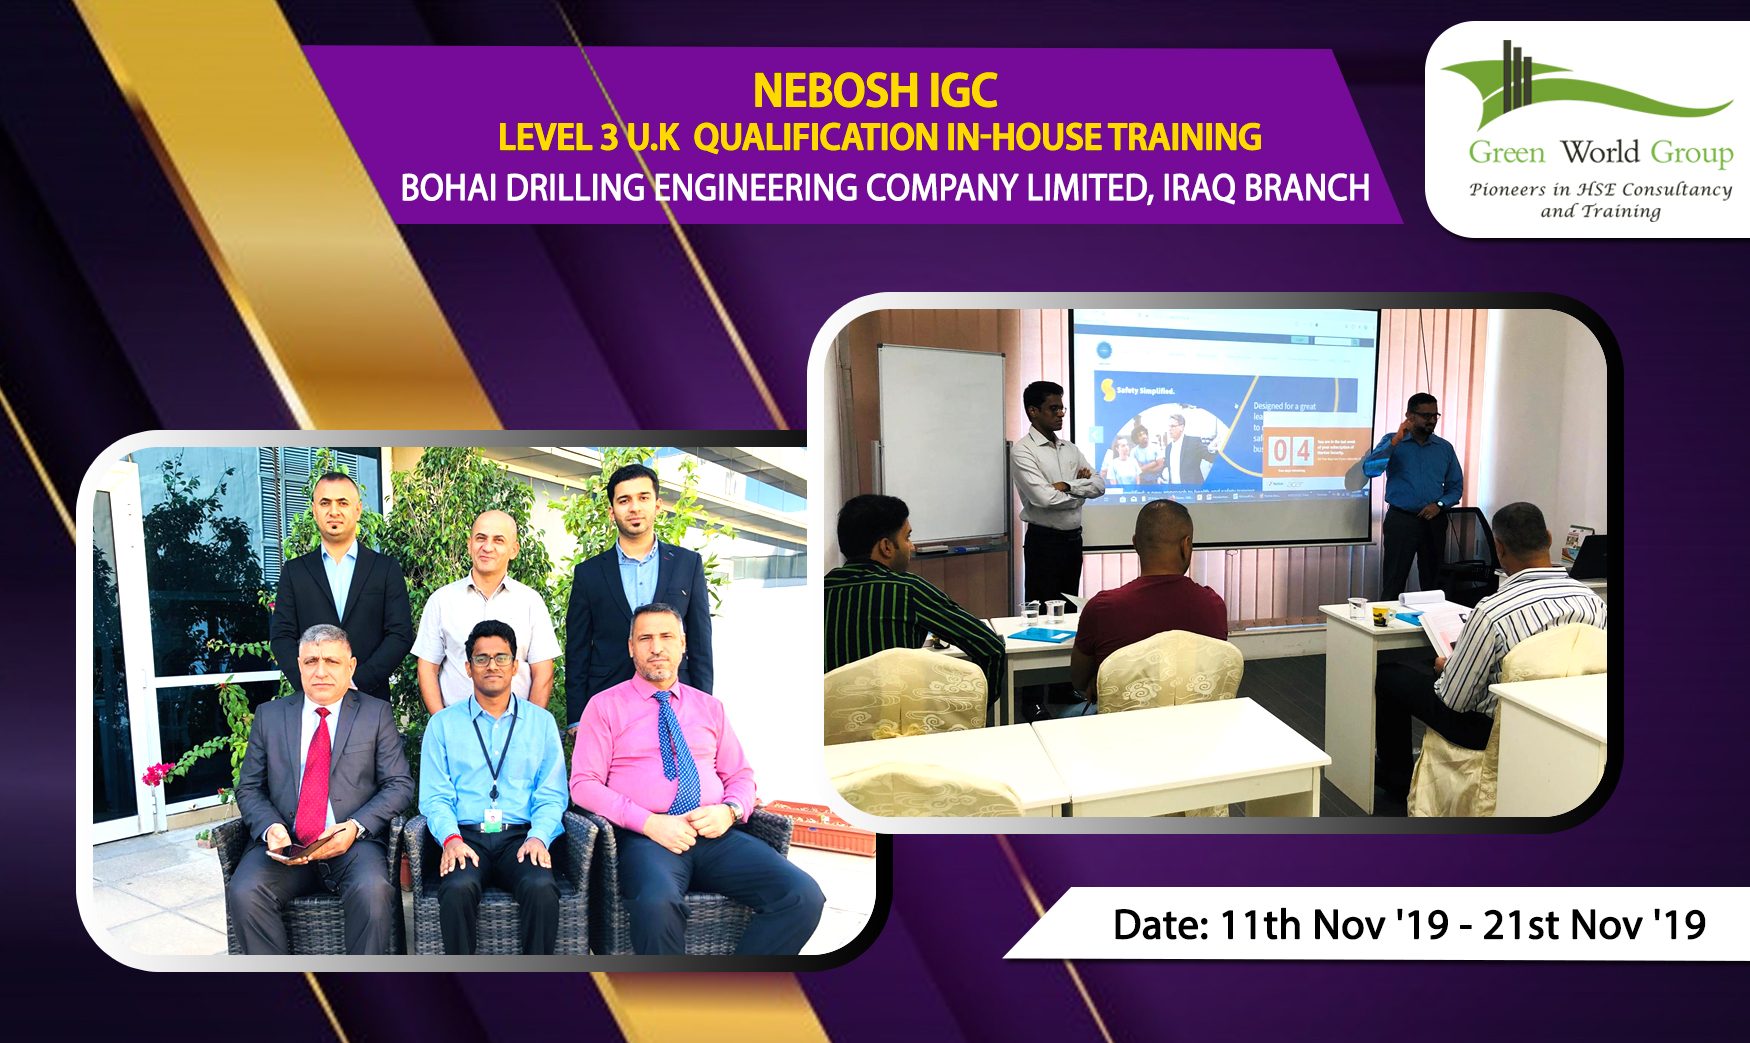 Nebosh IGC In-House Training for Bohai Drilling Engineering Company